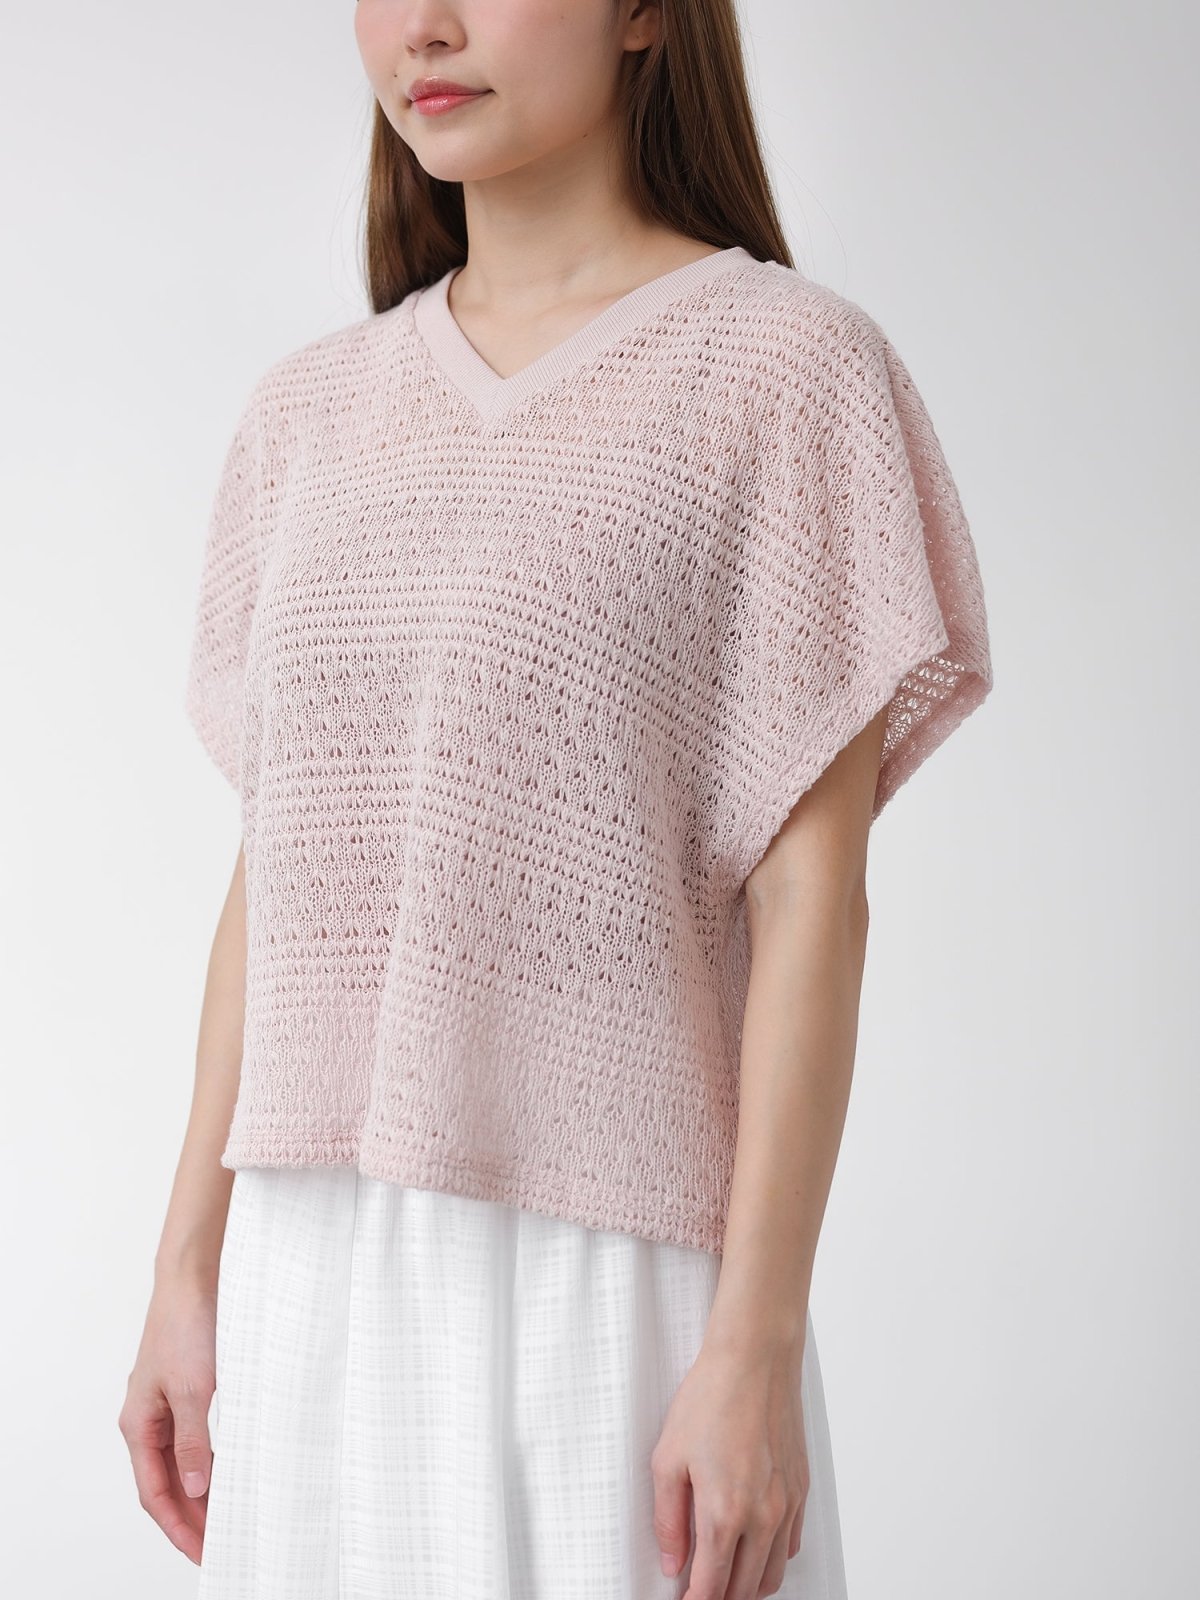 V-neck Crochet Top - DAG-DD1439-24SoftPinkF - Soft Pink - F - D'zage Designs